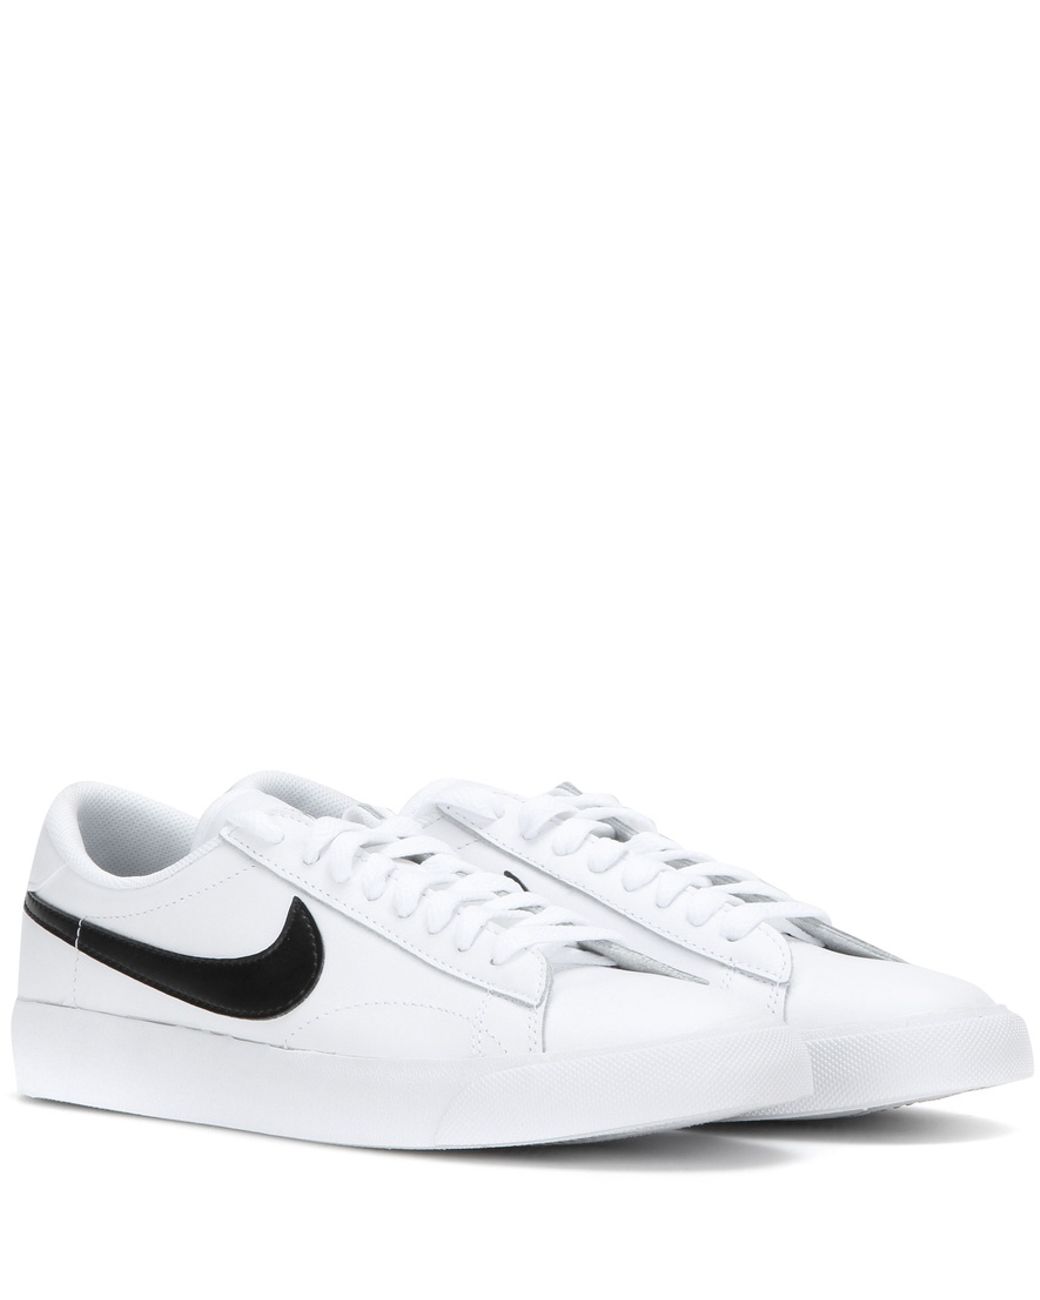 kampioen Elke week Reflectie Nike Tennis Classic Leather Sneakers in White | Lyst